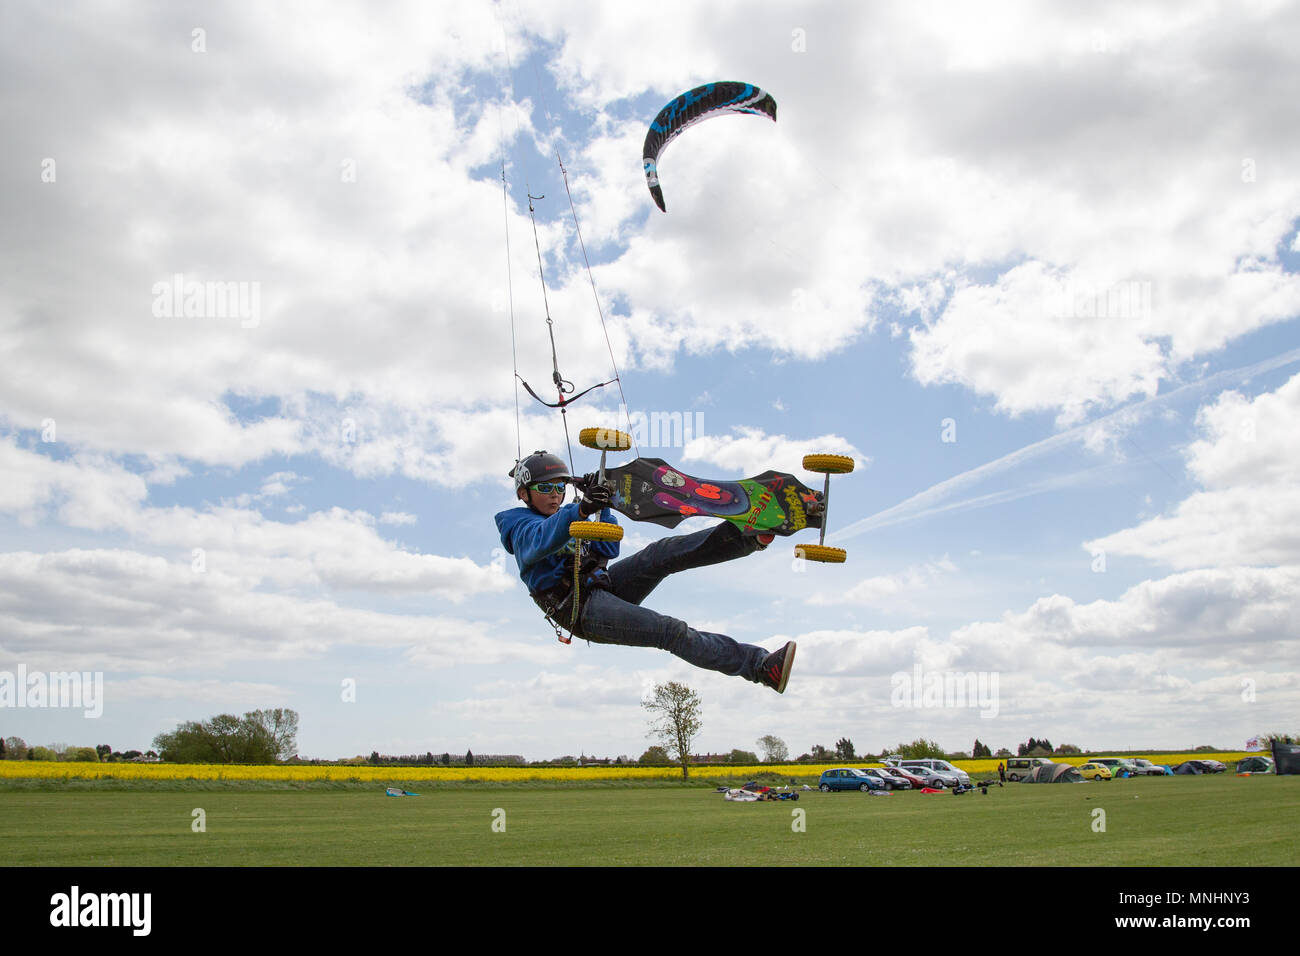 Extreme sport kite landboarding in Essex, UK.  Going airborne. Stock Photo